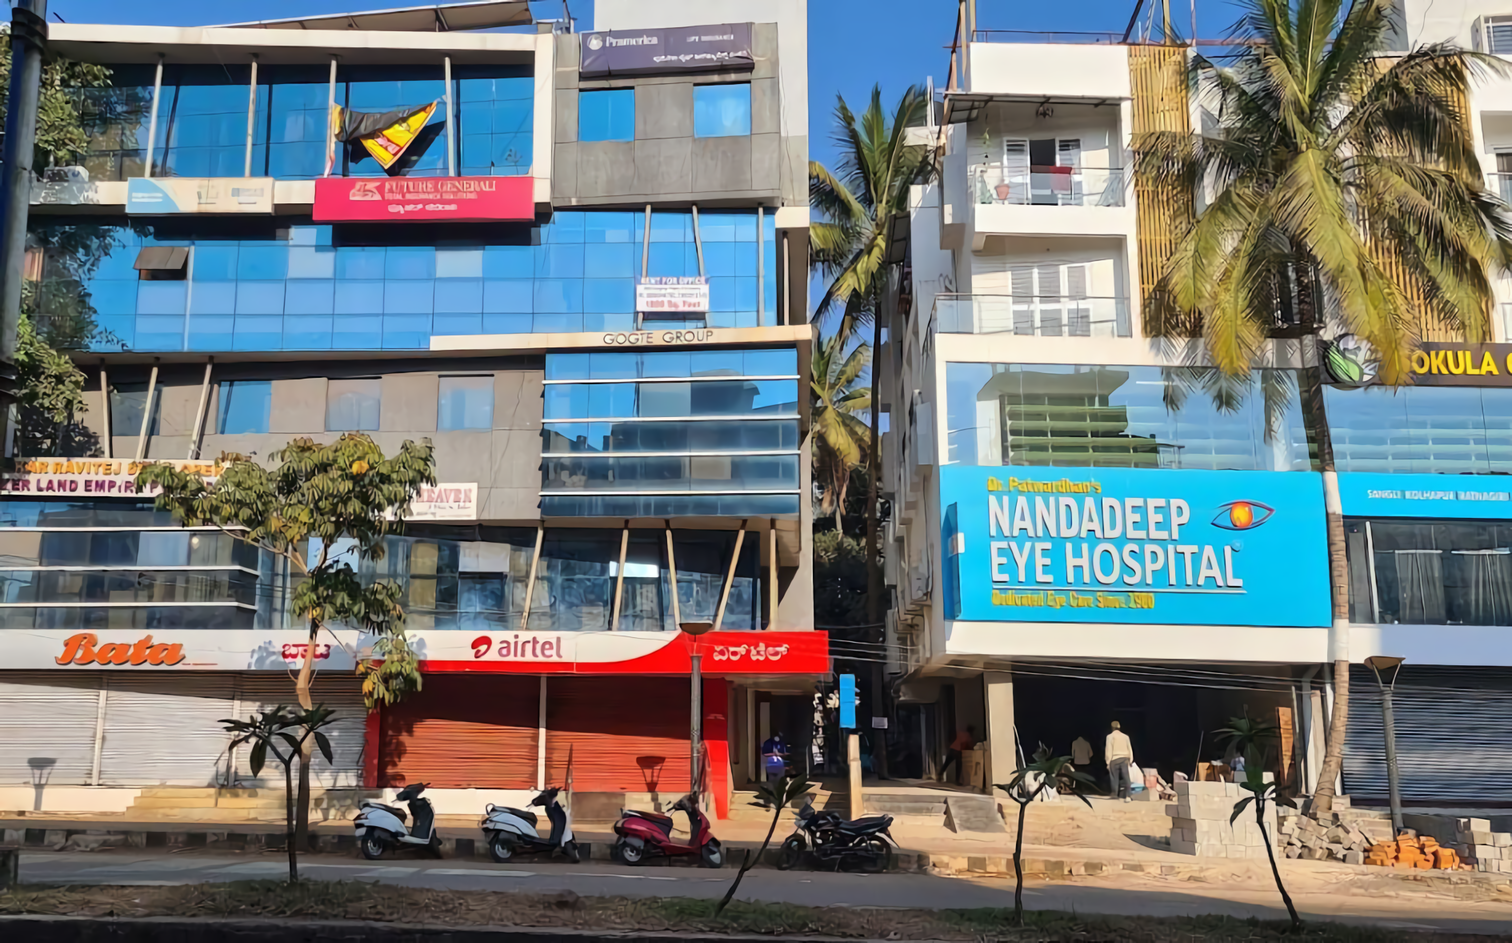 Nandadeep Eye Hospital